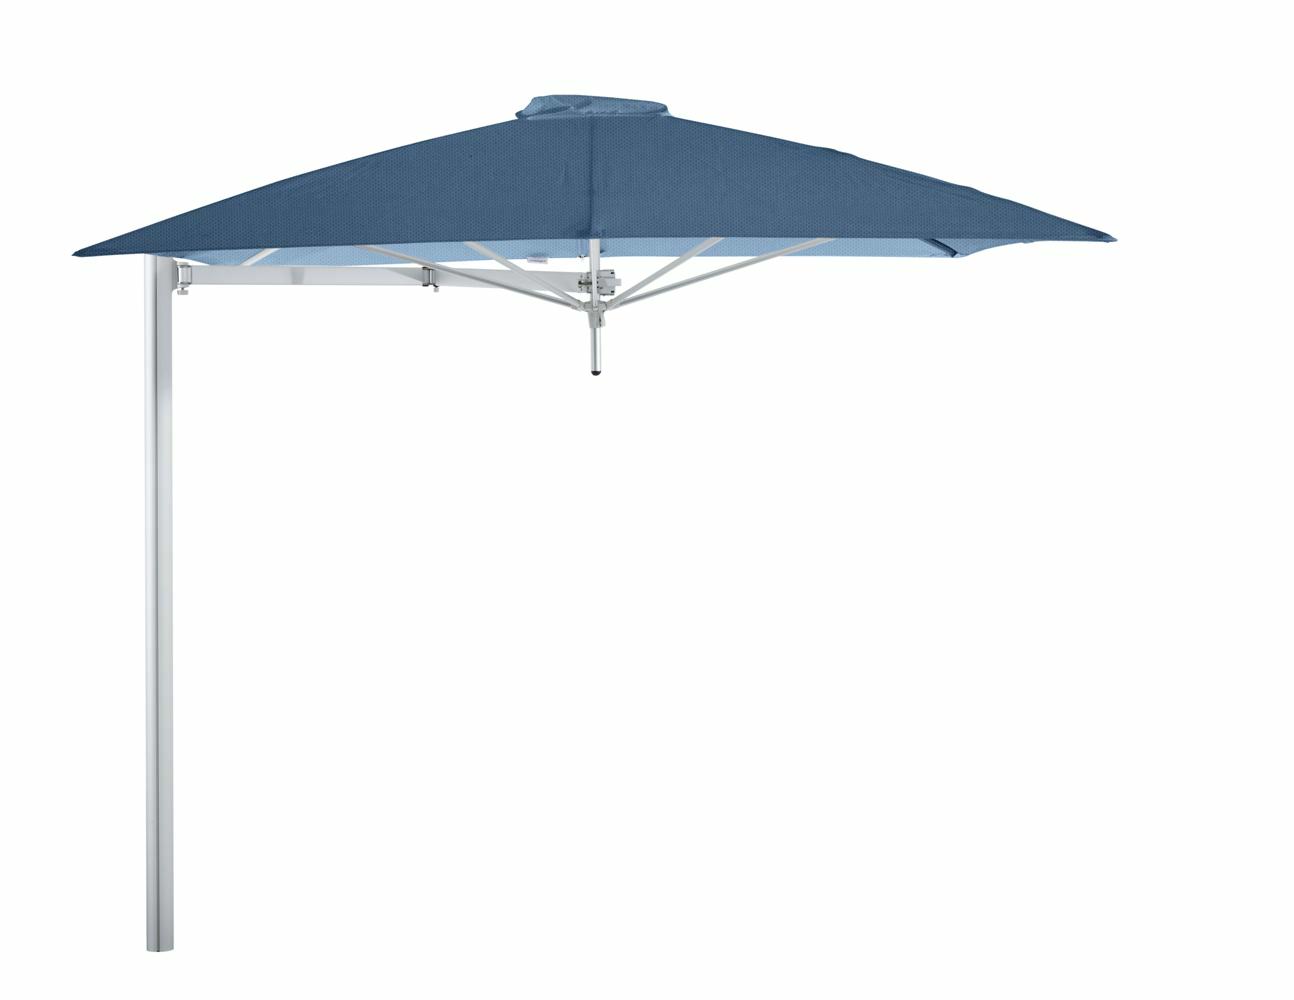 Paraflex cantilever umbrella square 2,3 m with Blue Storm fabric and a Neo arm